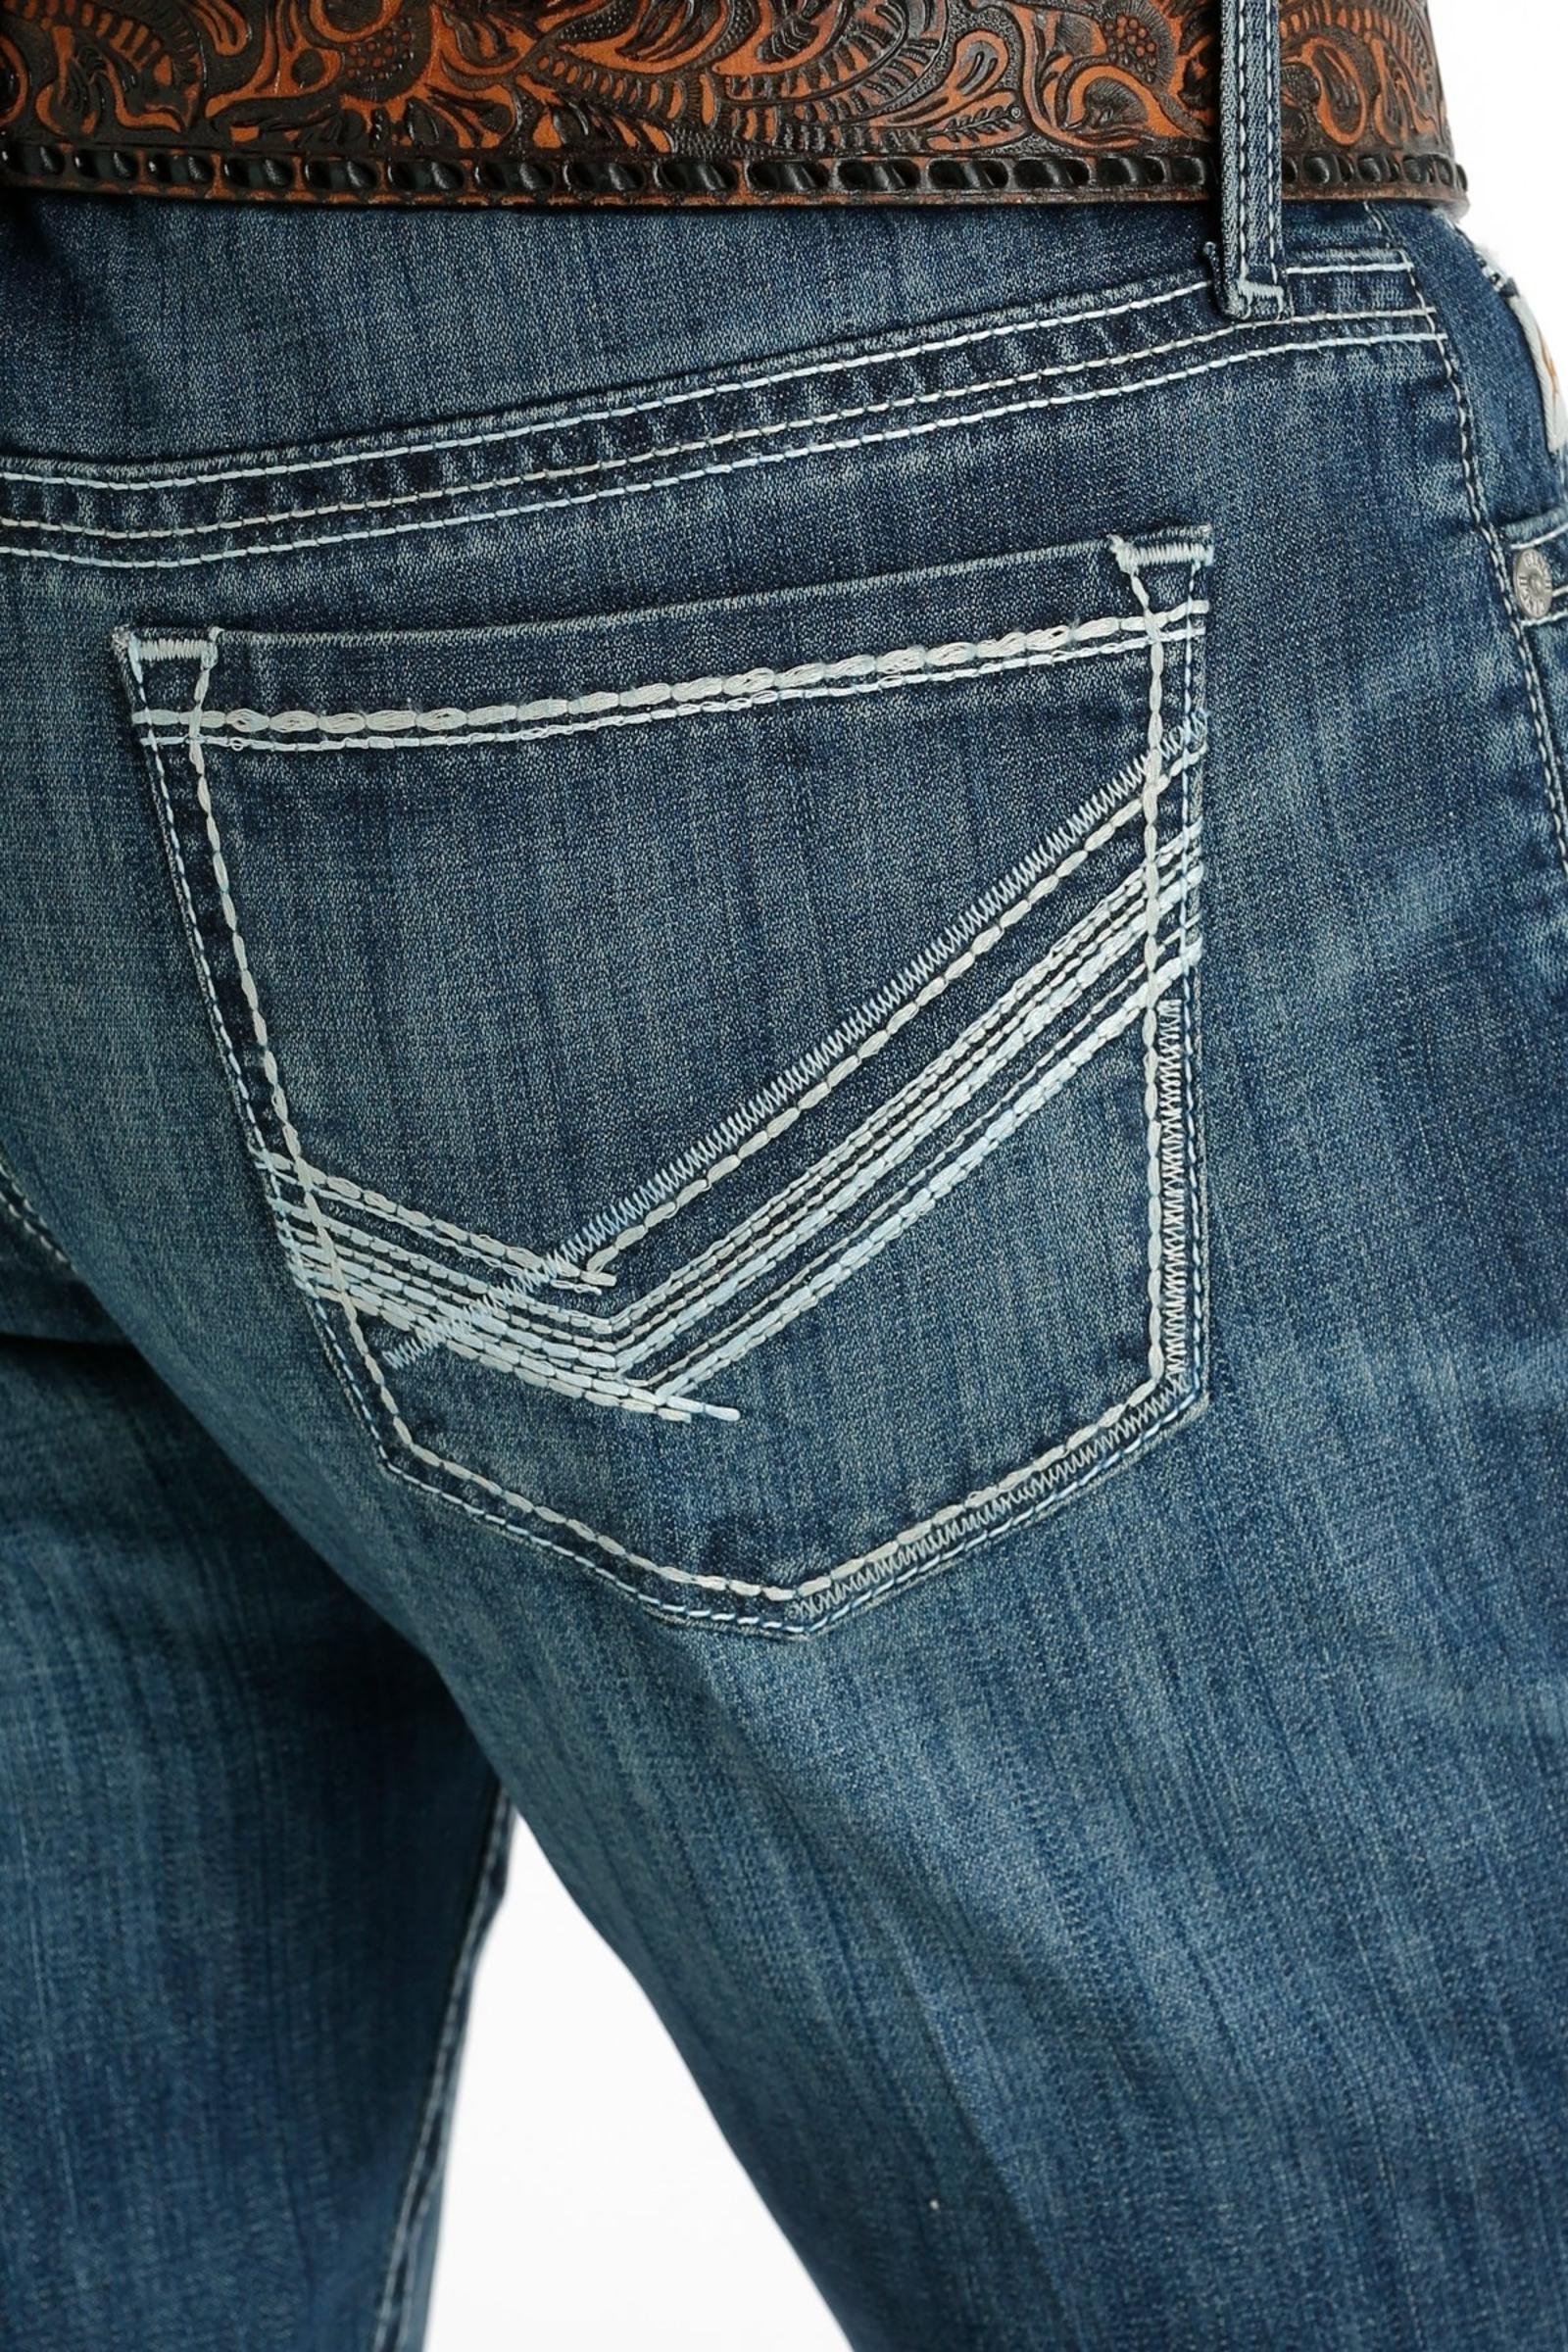 Cinch Jeans Men's Slim Fit Ian - Medium Stonewash pocket